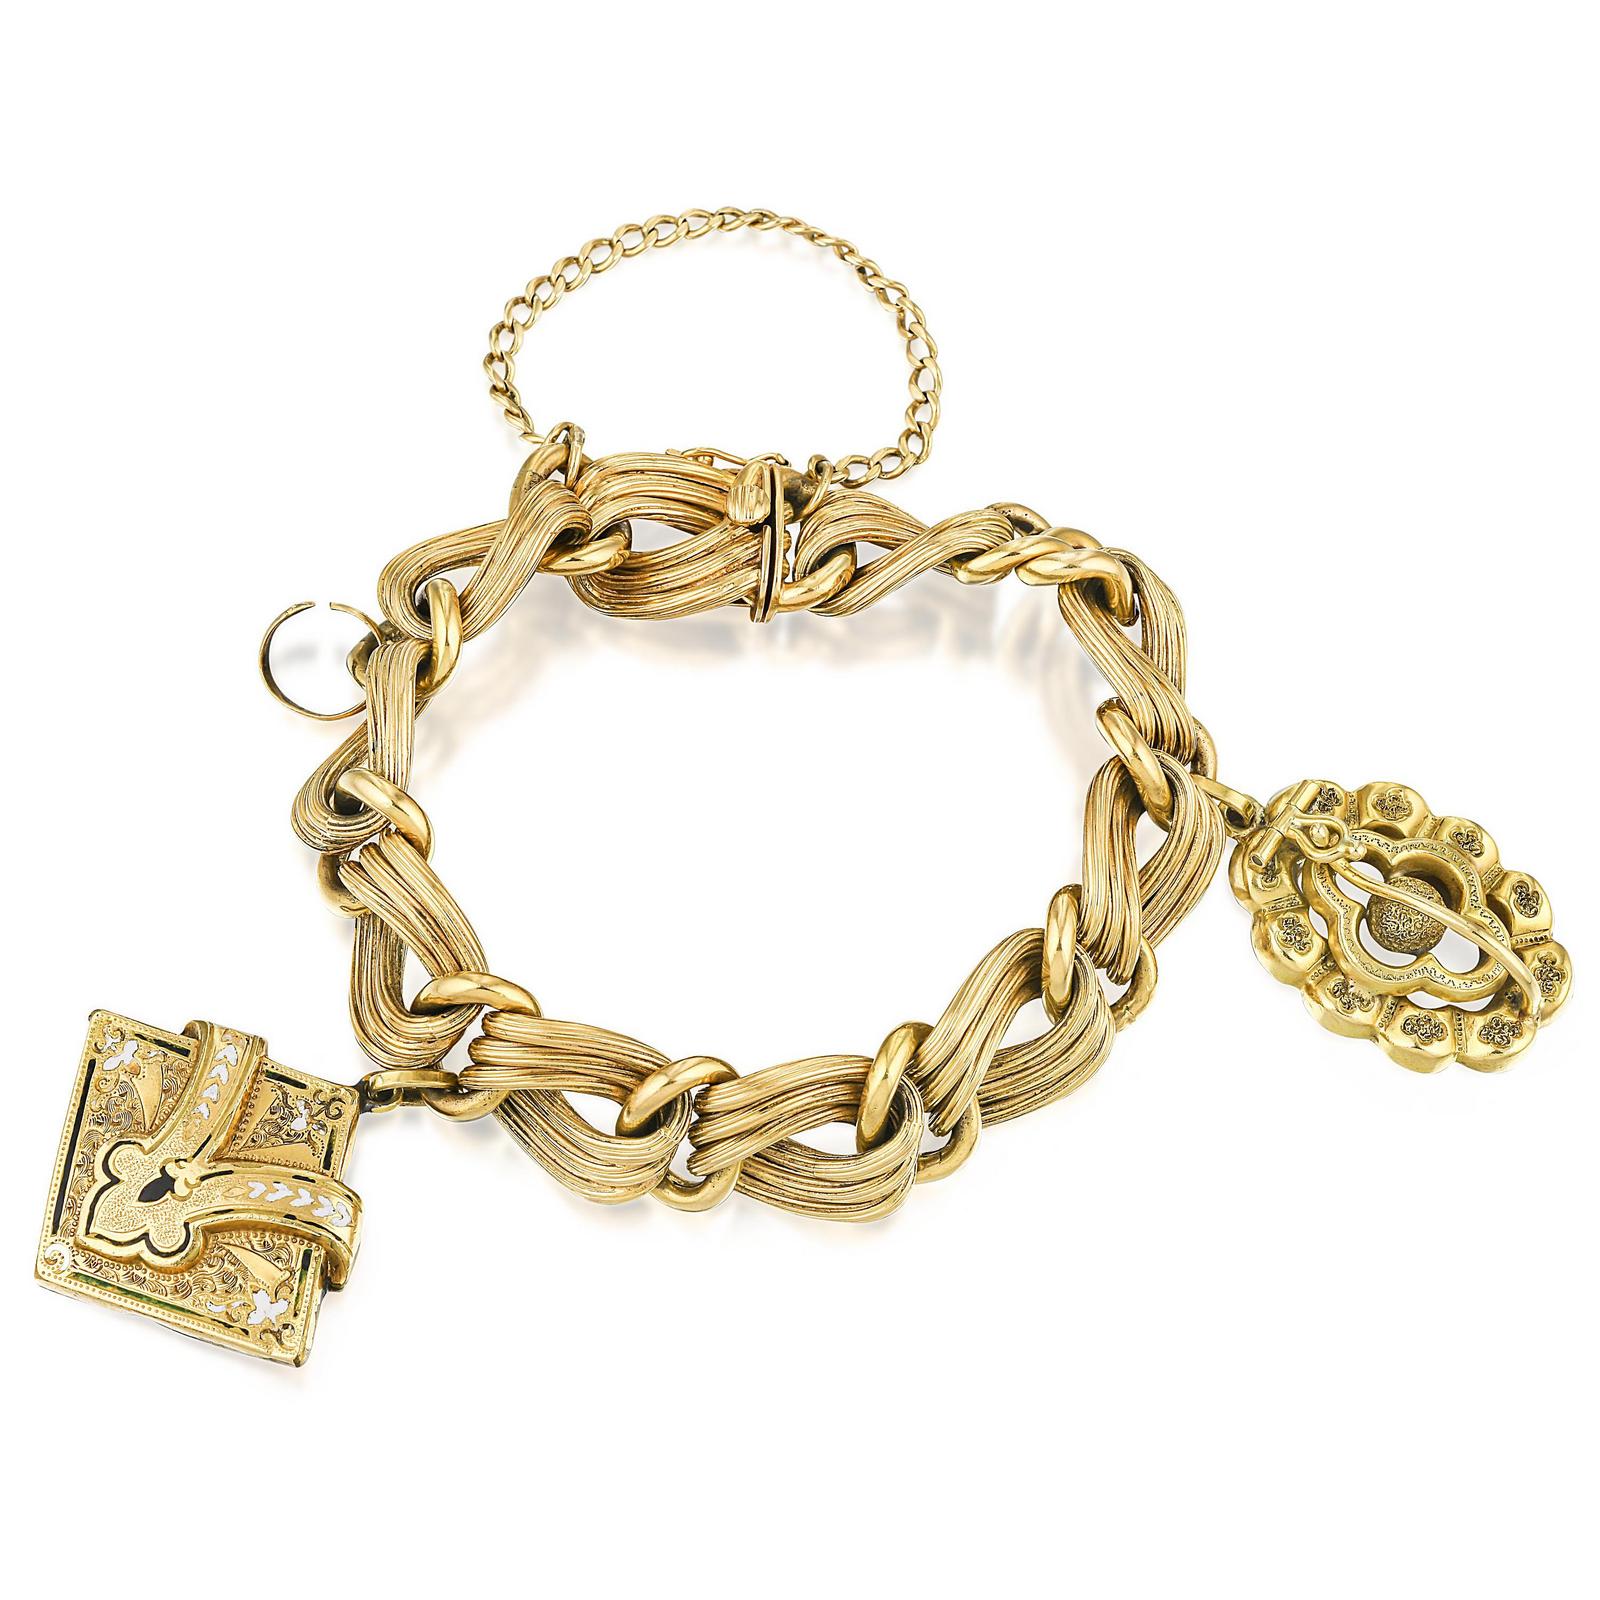 Sold at Auction: 14k gold charm bracelet